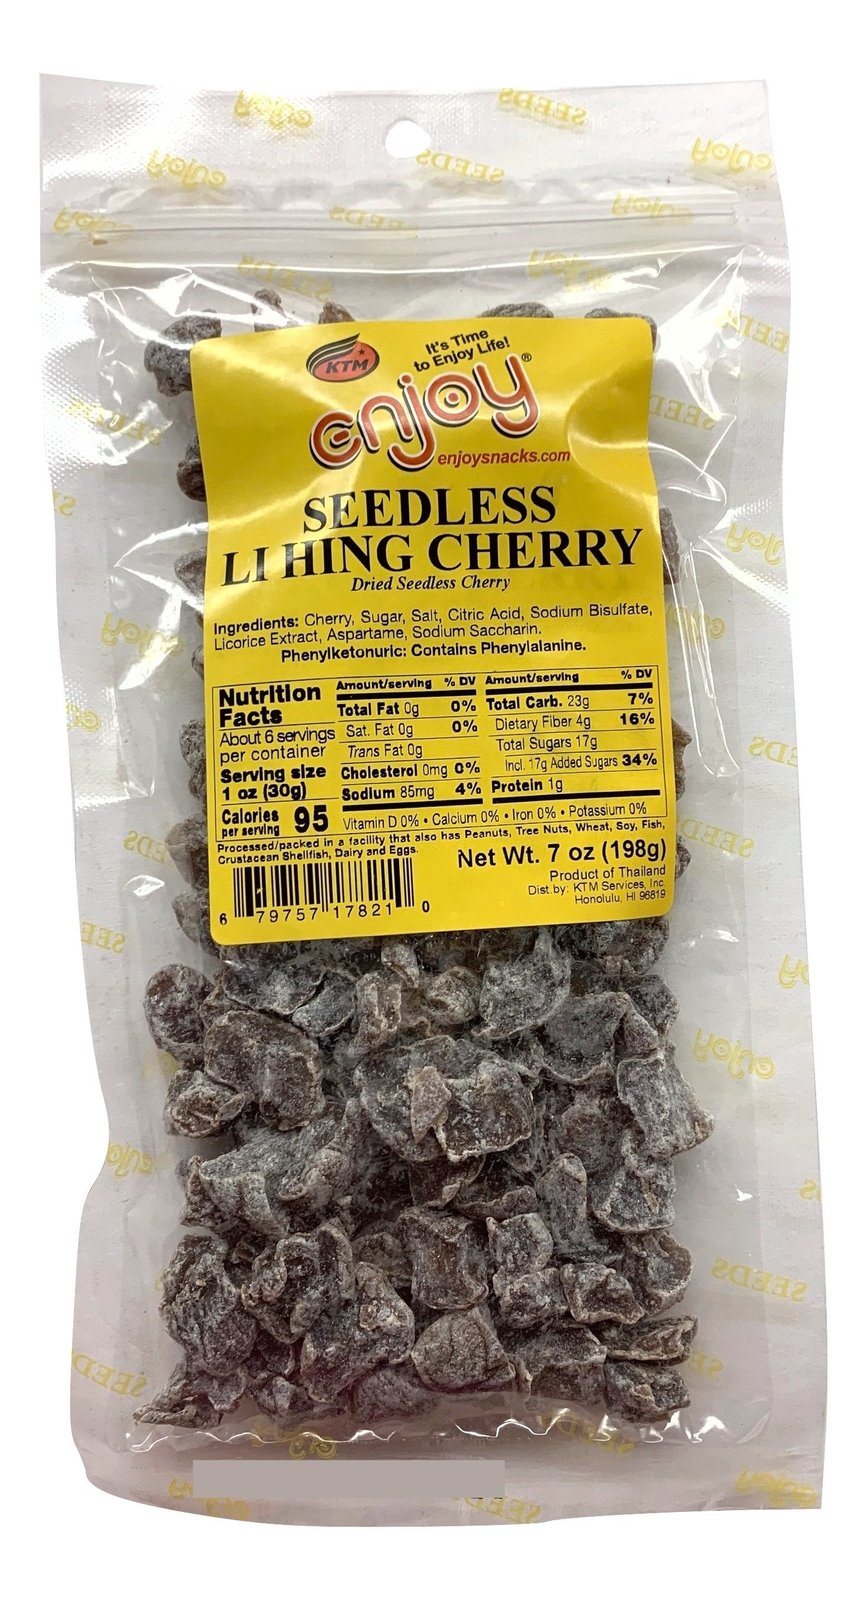 Enjoy Seedless Li Hing Cherry 7 Ounce Bag